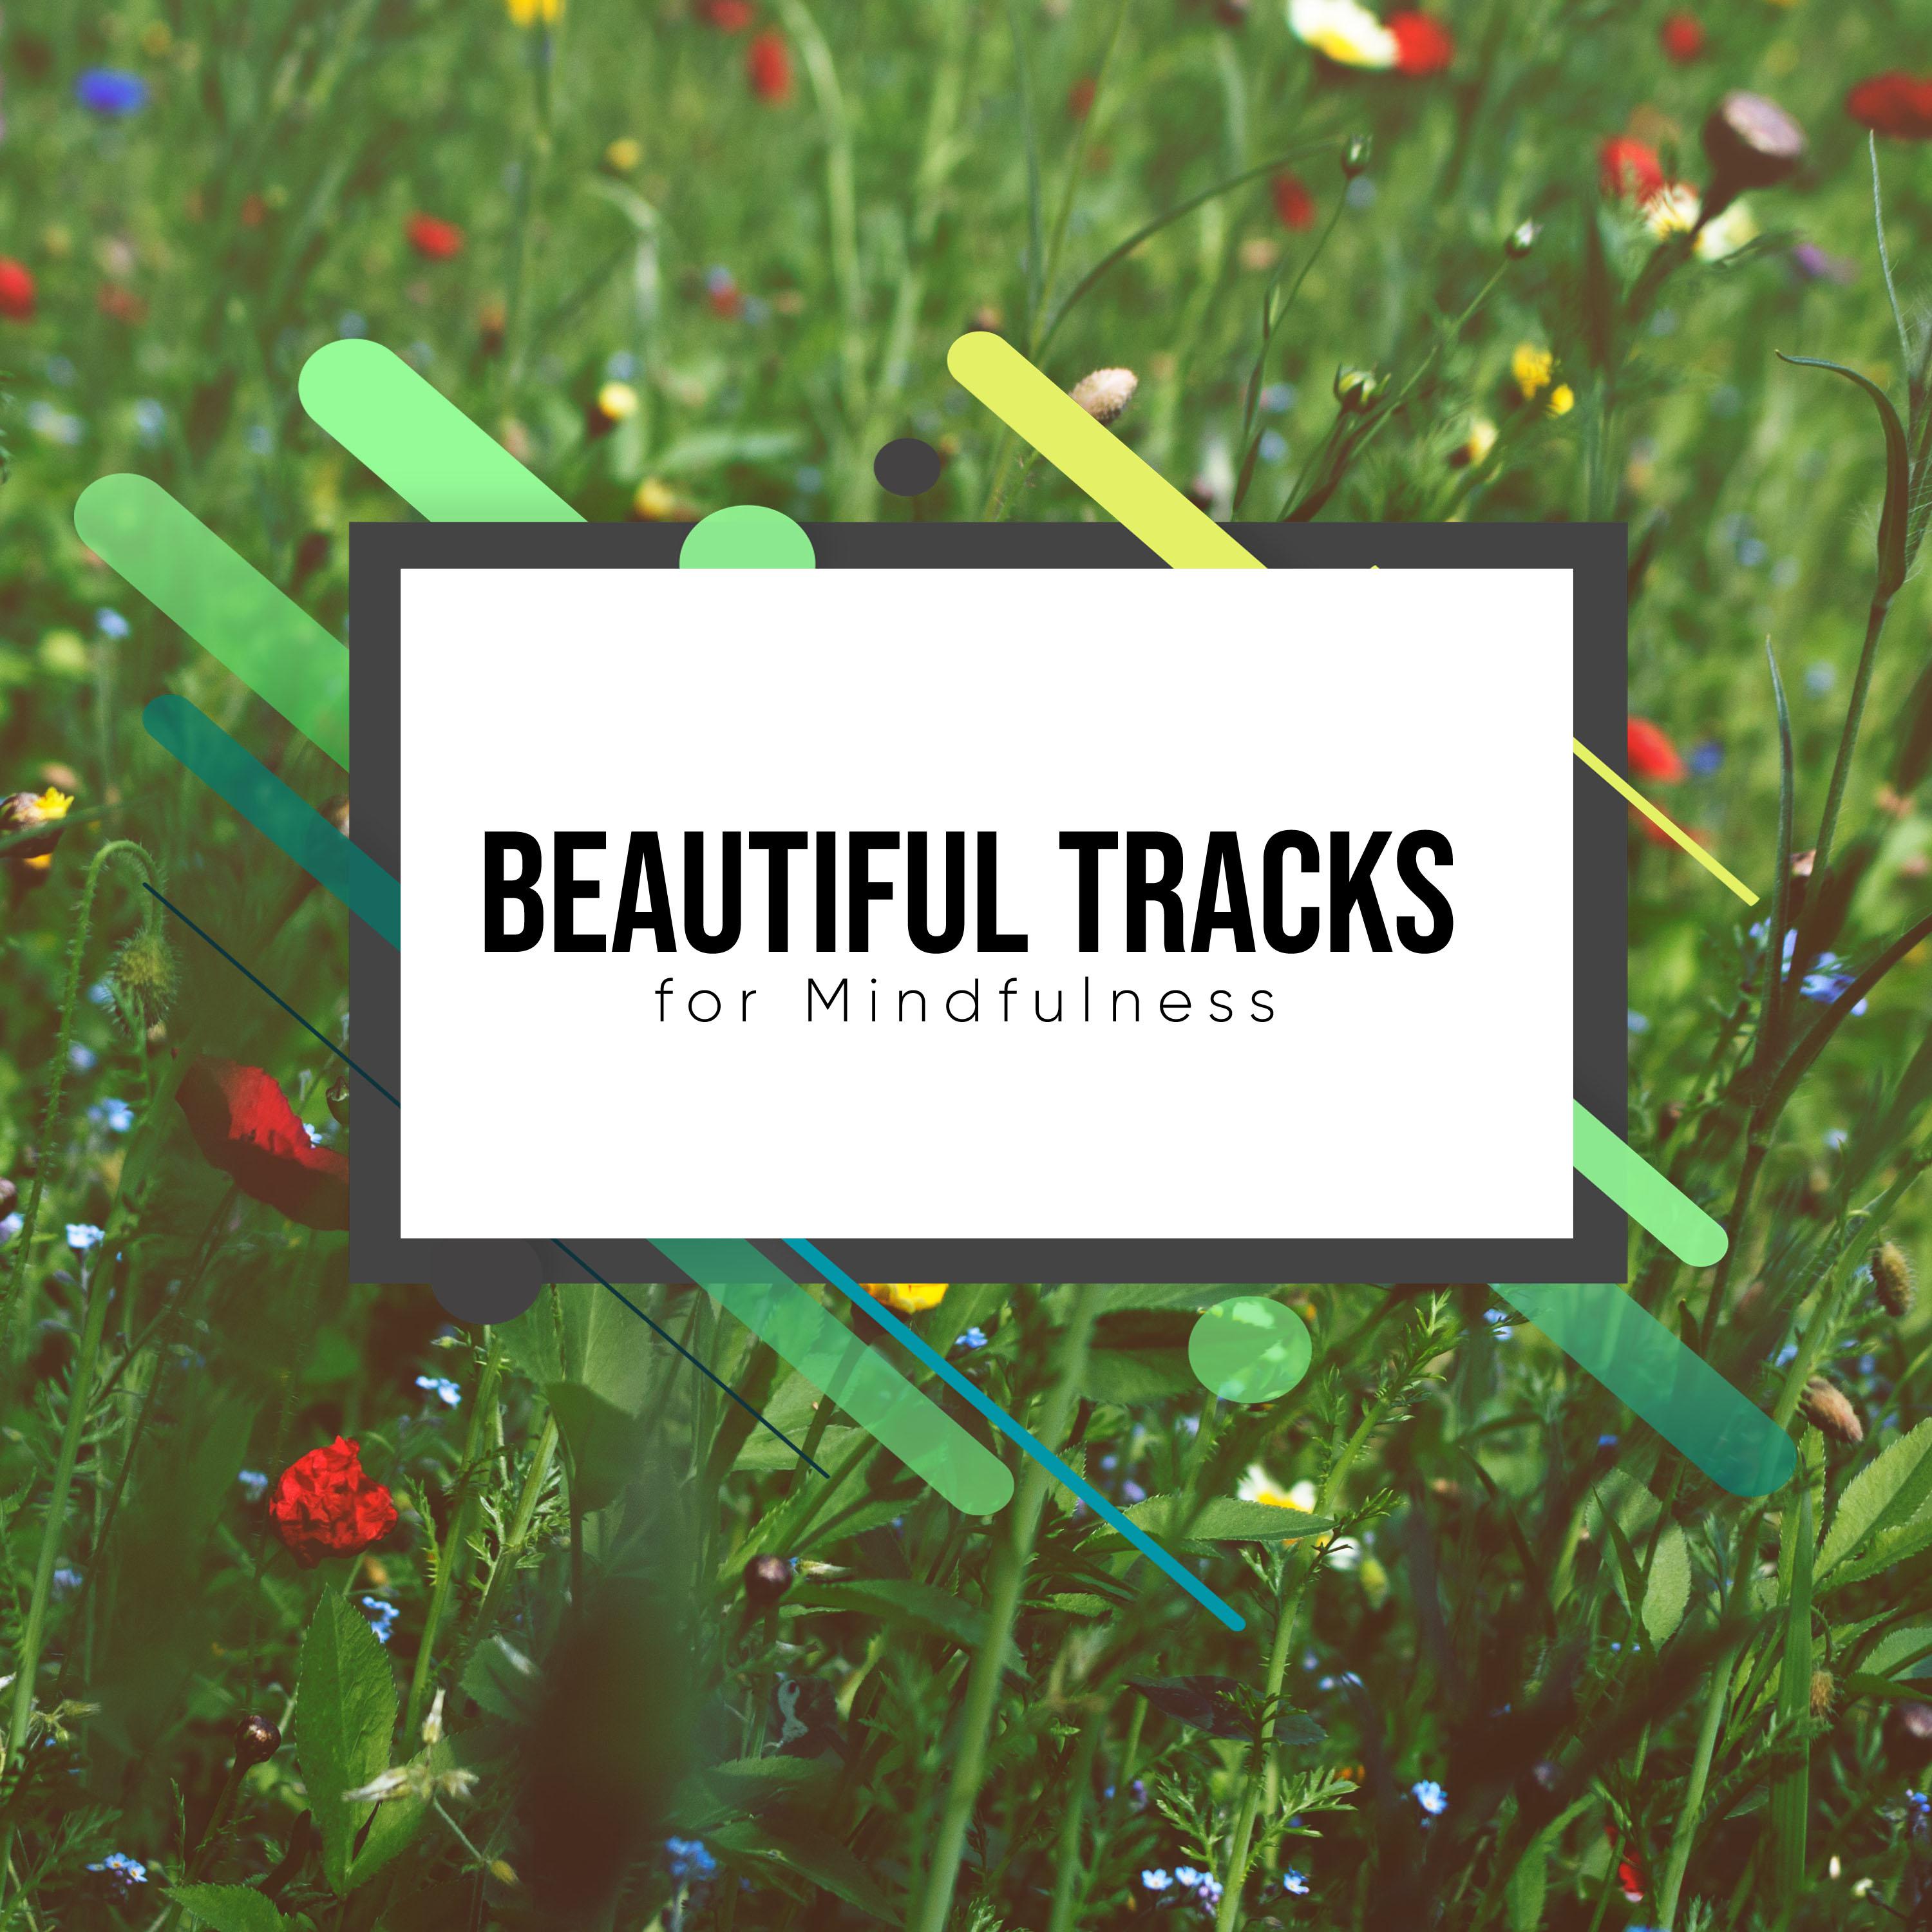 17 Beautiful Tracks for Mindfulness